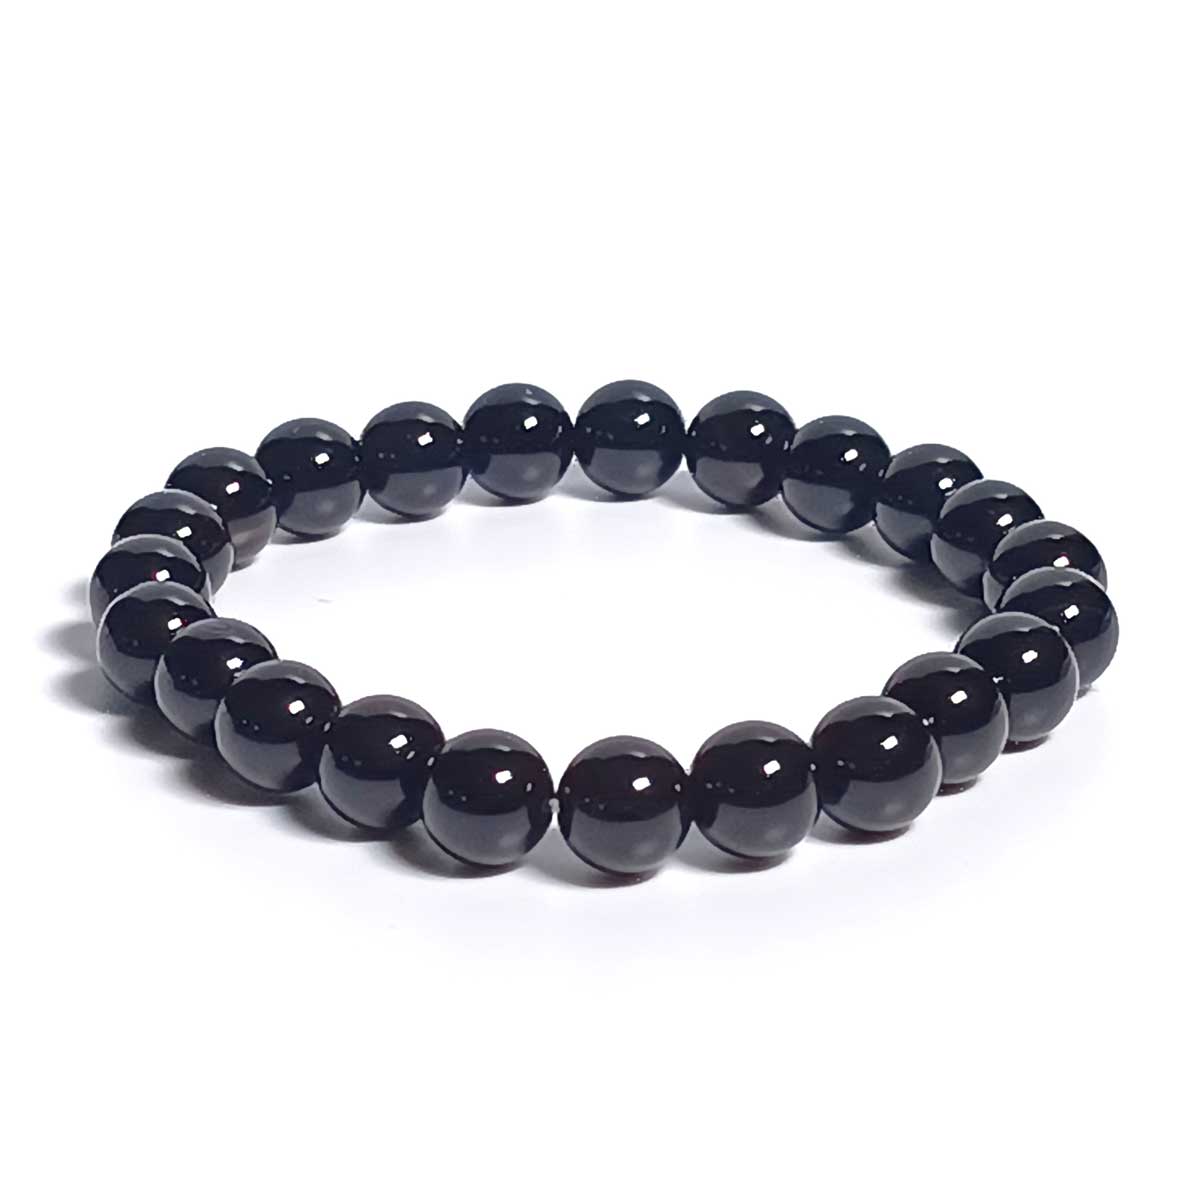 Buy Black Onyx Beads Bracelet Online in India